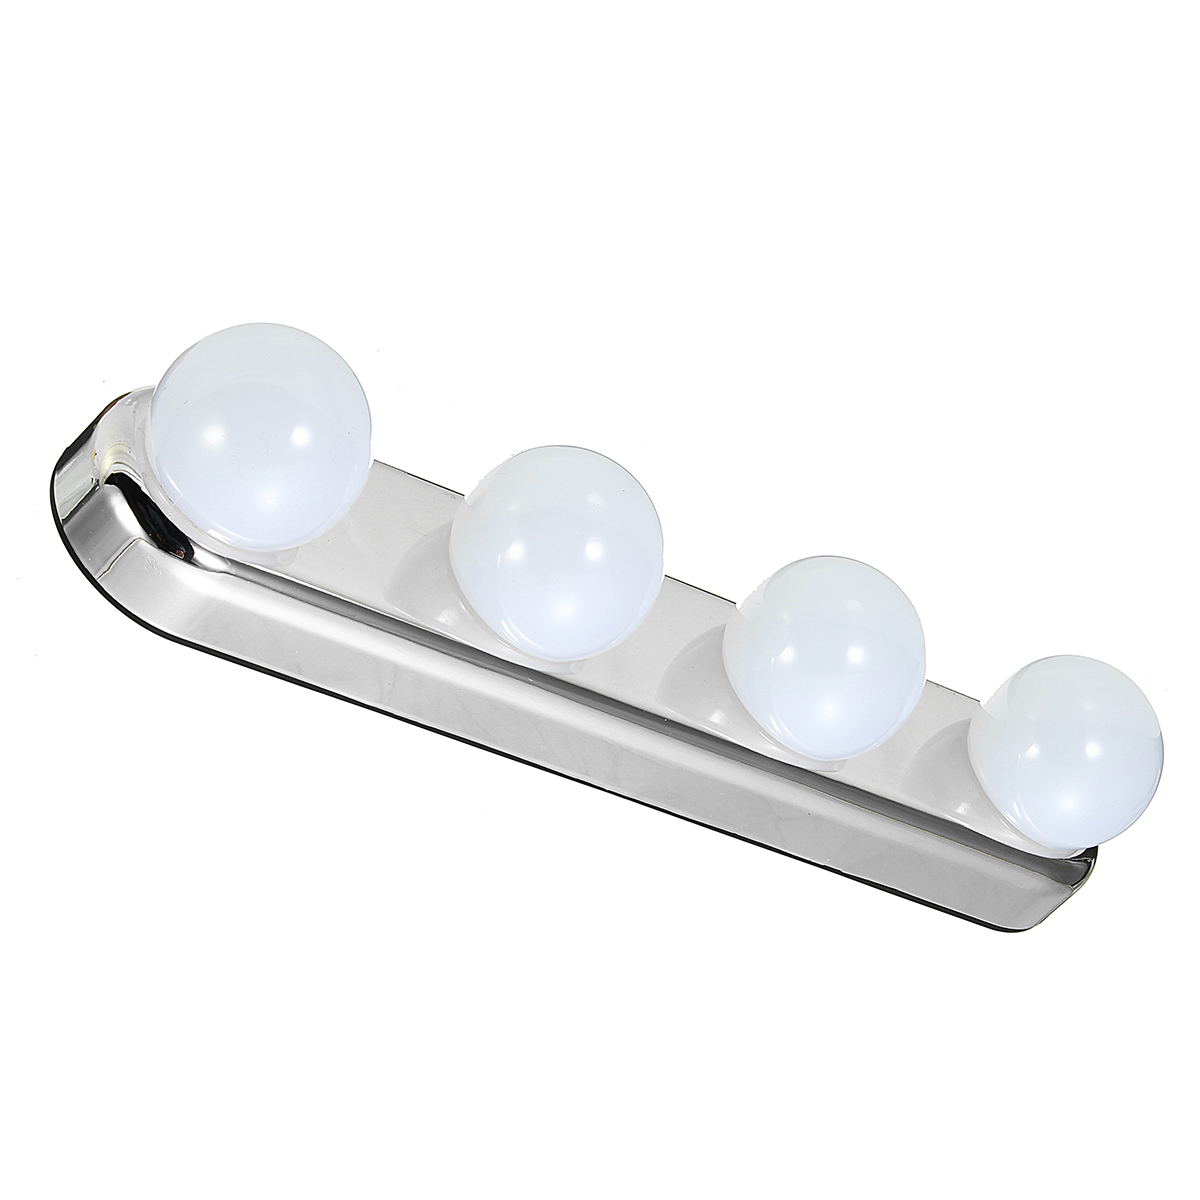 4-Bulbs-LED-Makeup-Mirror-Light-Portable-Suction-Cups-Batteries-Powered-Makeup-Lamp-1431963